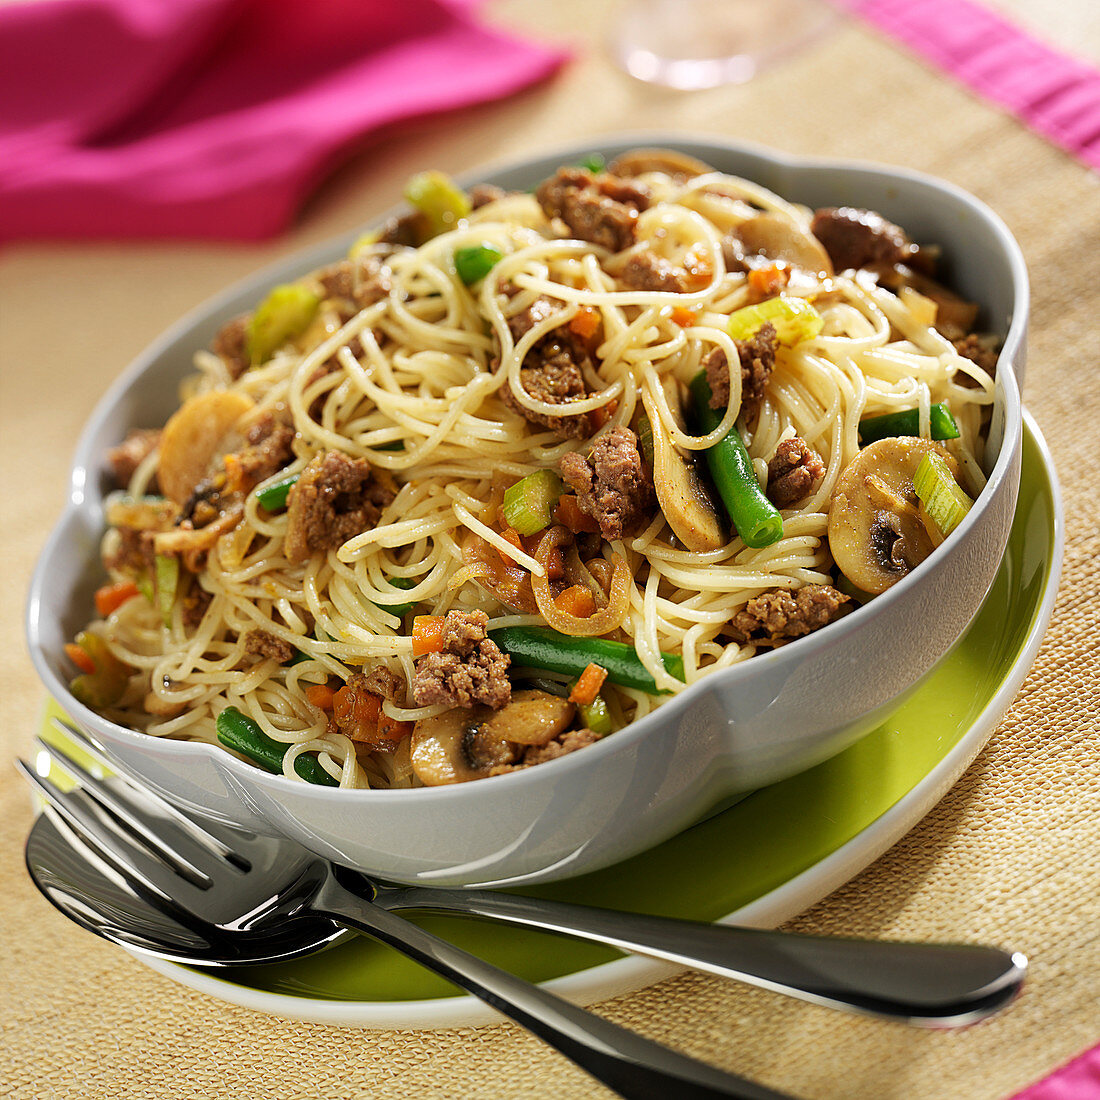 Spaghettis, beef and vegetable stir-fry